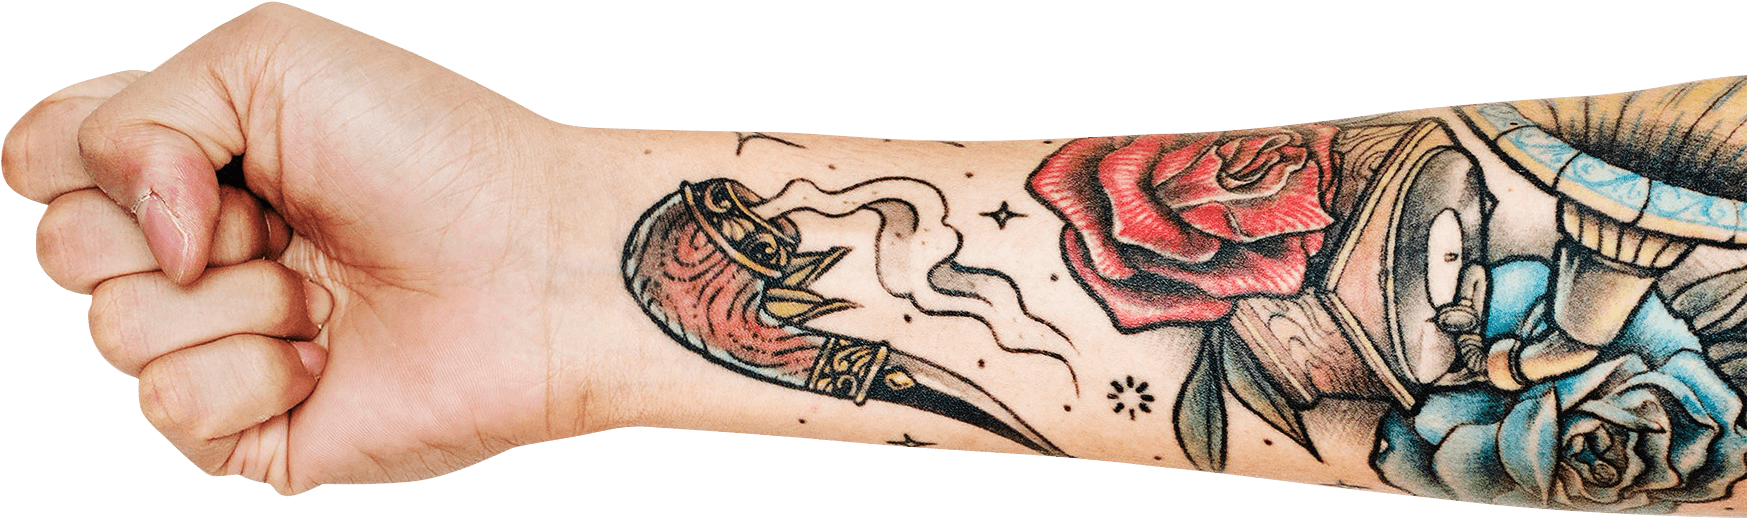 Colorful Arm Tattoo Artwork